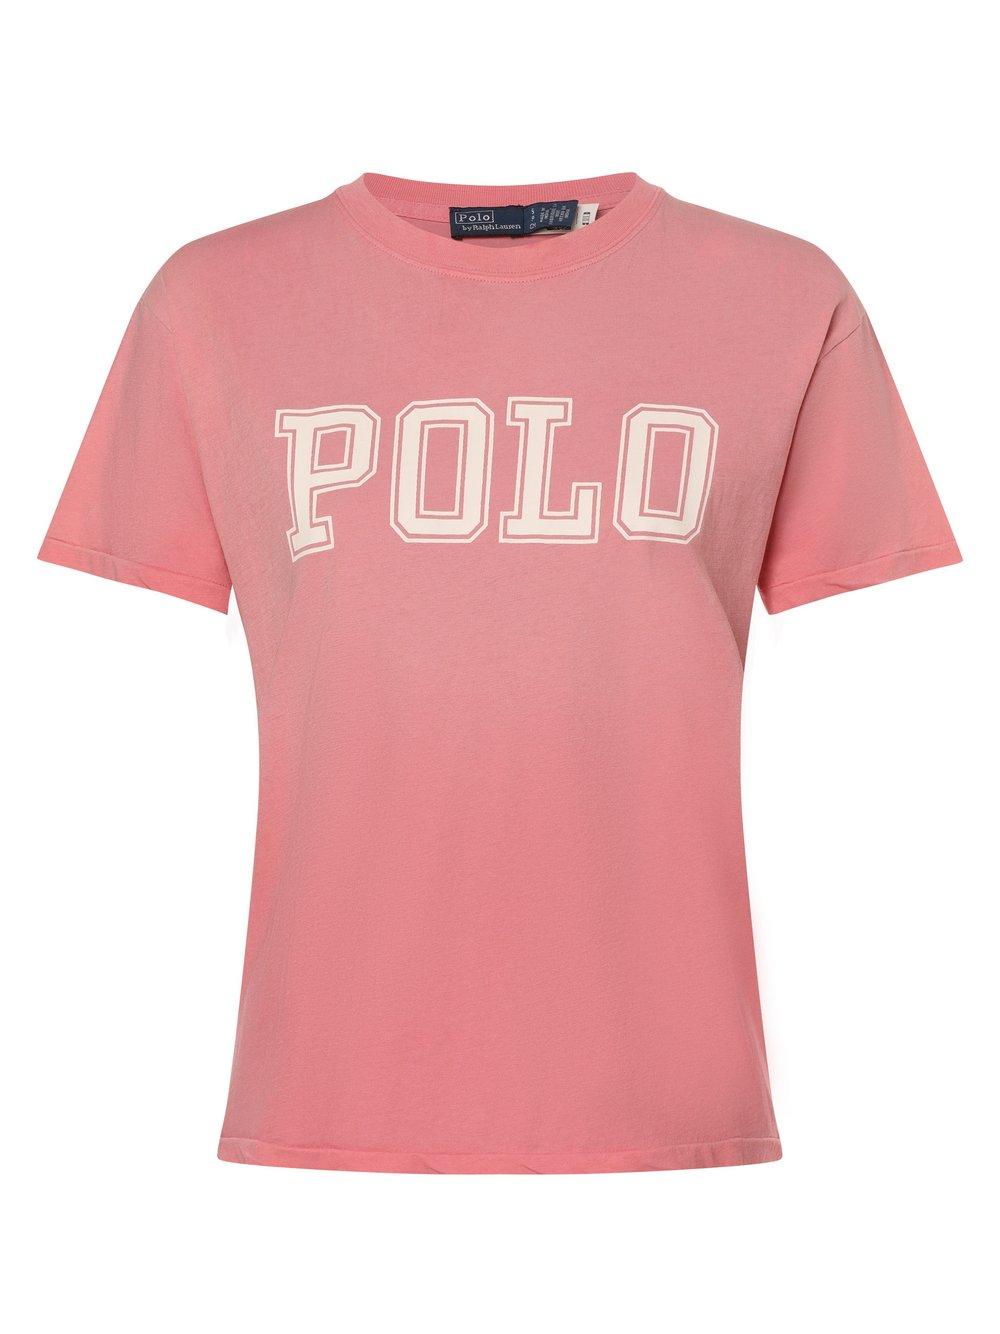 Polo Ralph Lauren T-Shirt Damen Baumwolle Rundhals bedruckt, rosa von Polo Ralph Lauren